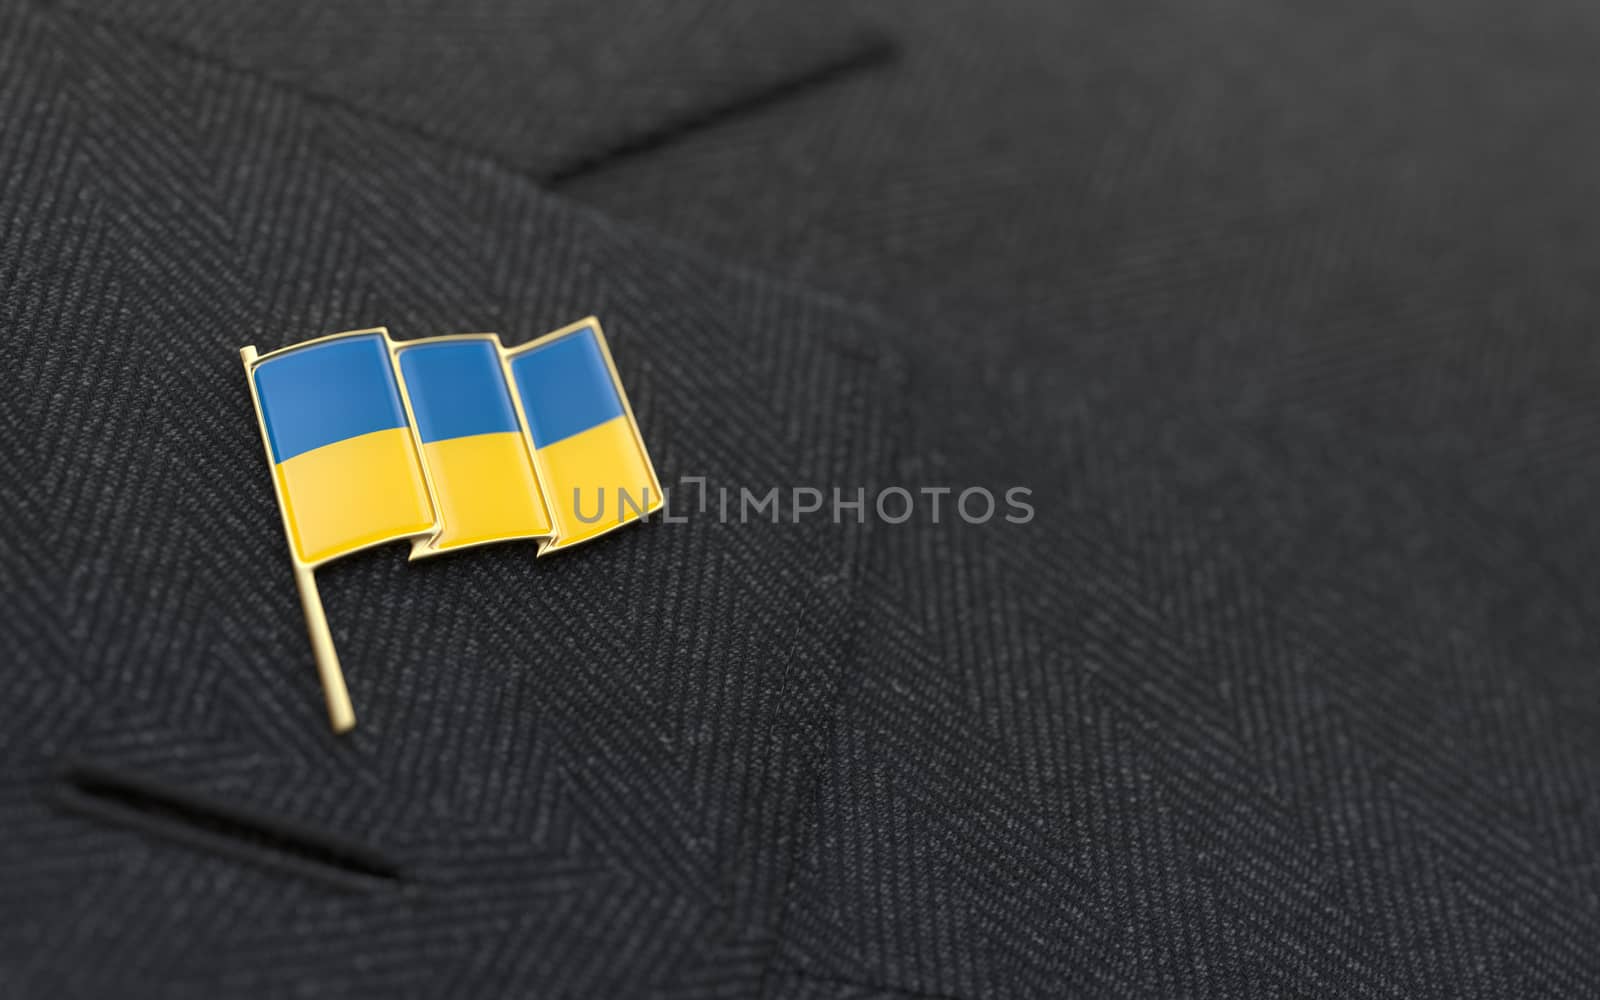 Ukraine flag lapel pin on the collar of a business suit jacket shows patriotism